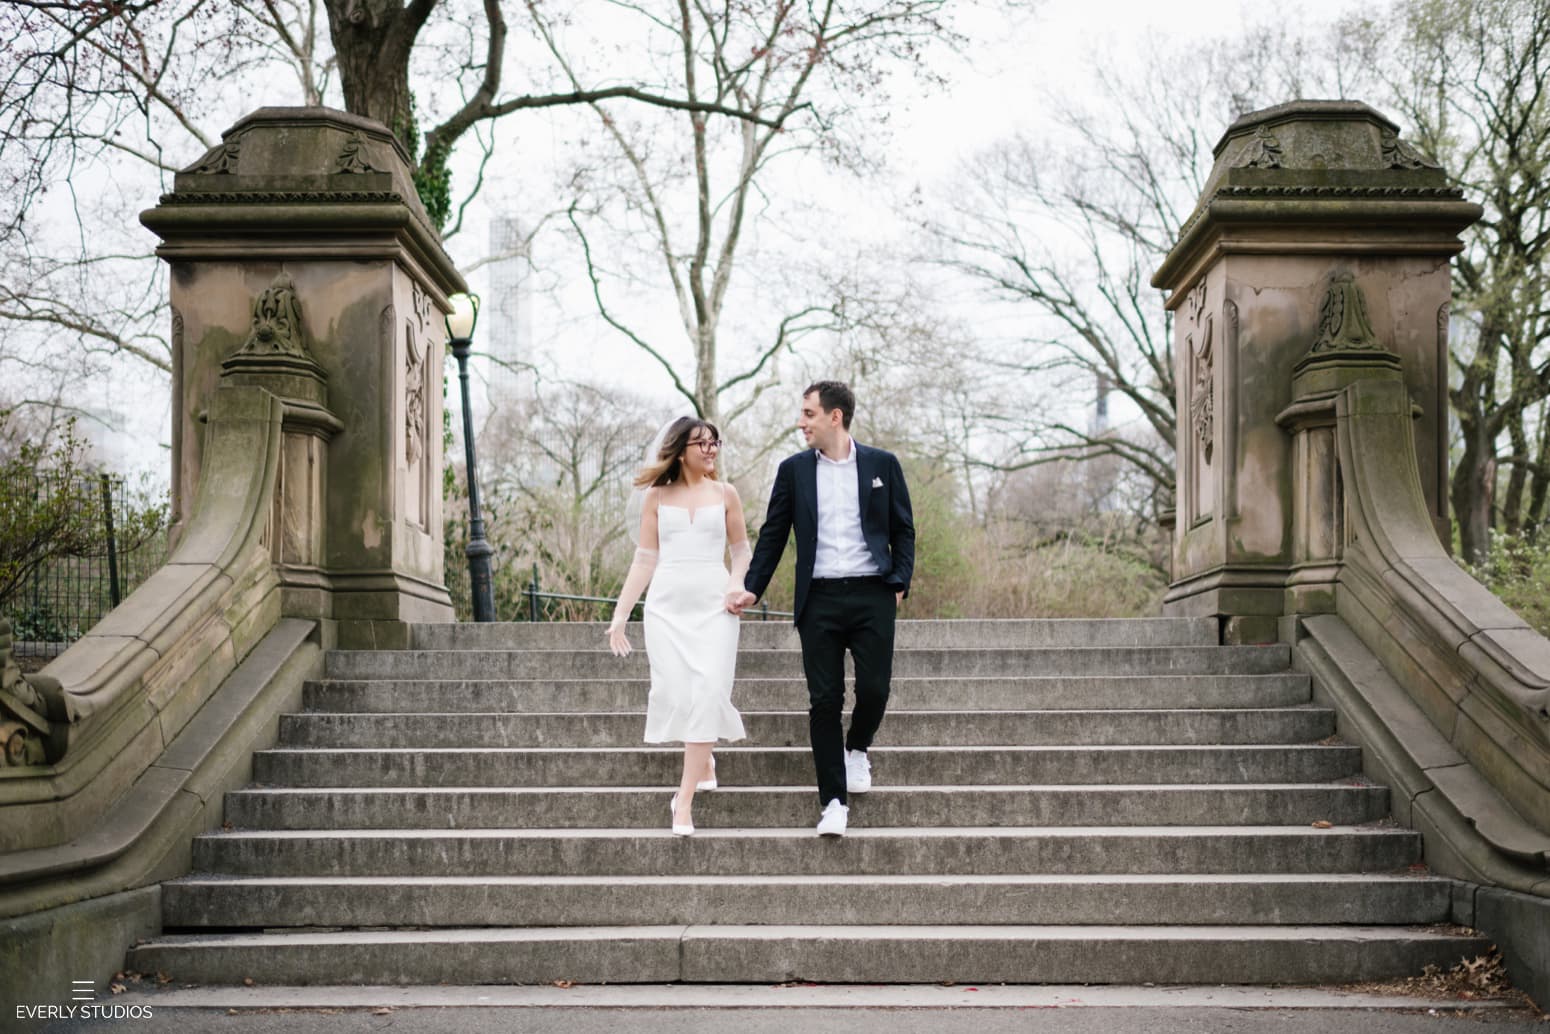 New York Central Park wedding at Bethesda Terrace